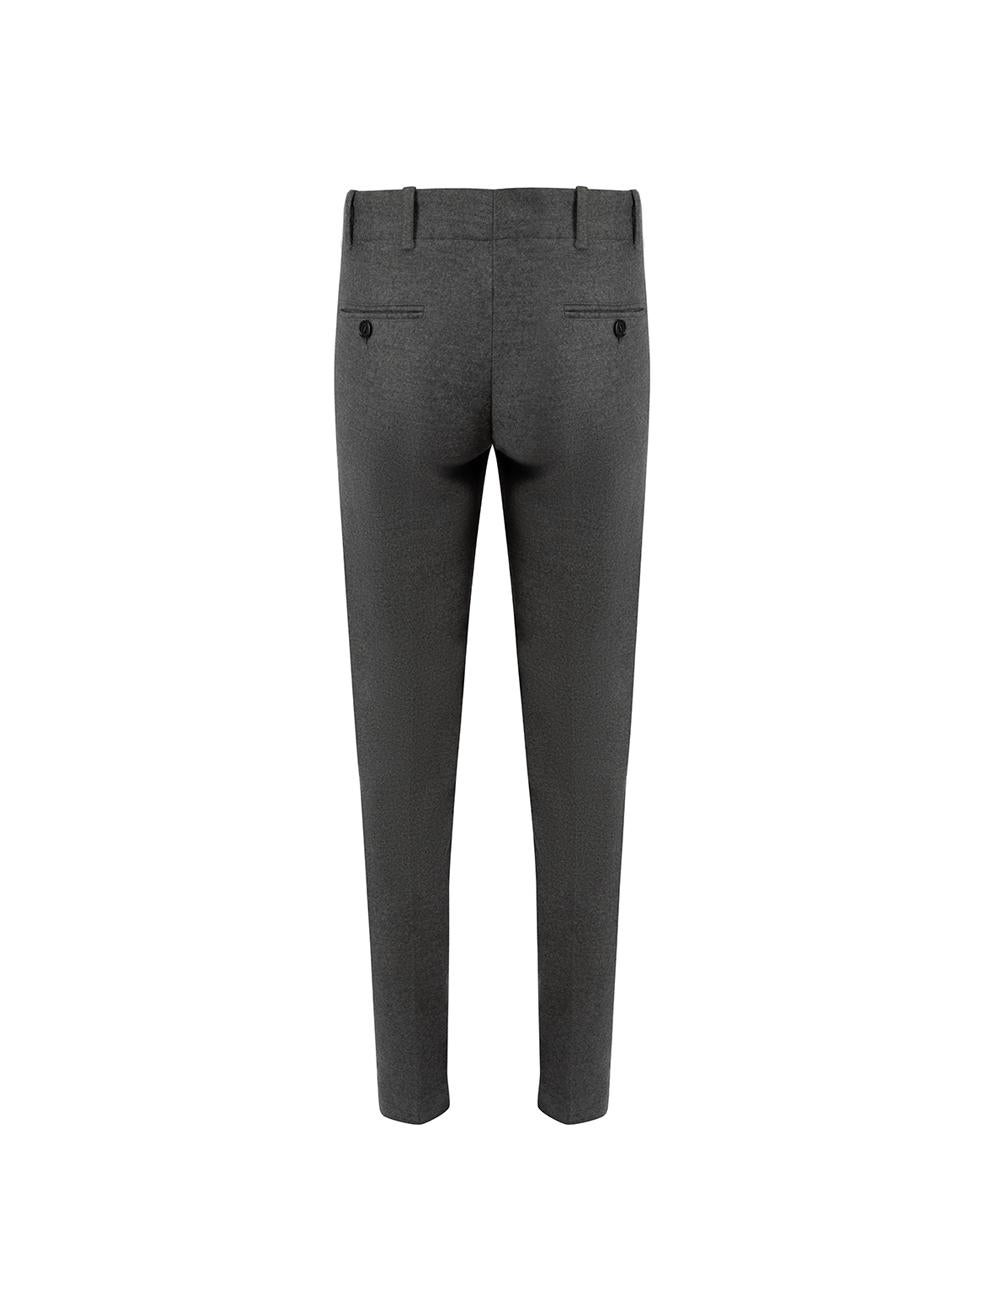 Black Prada Grey Wool Ankle Zip Slim Trousers Size S For Sale